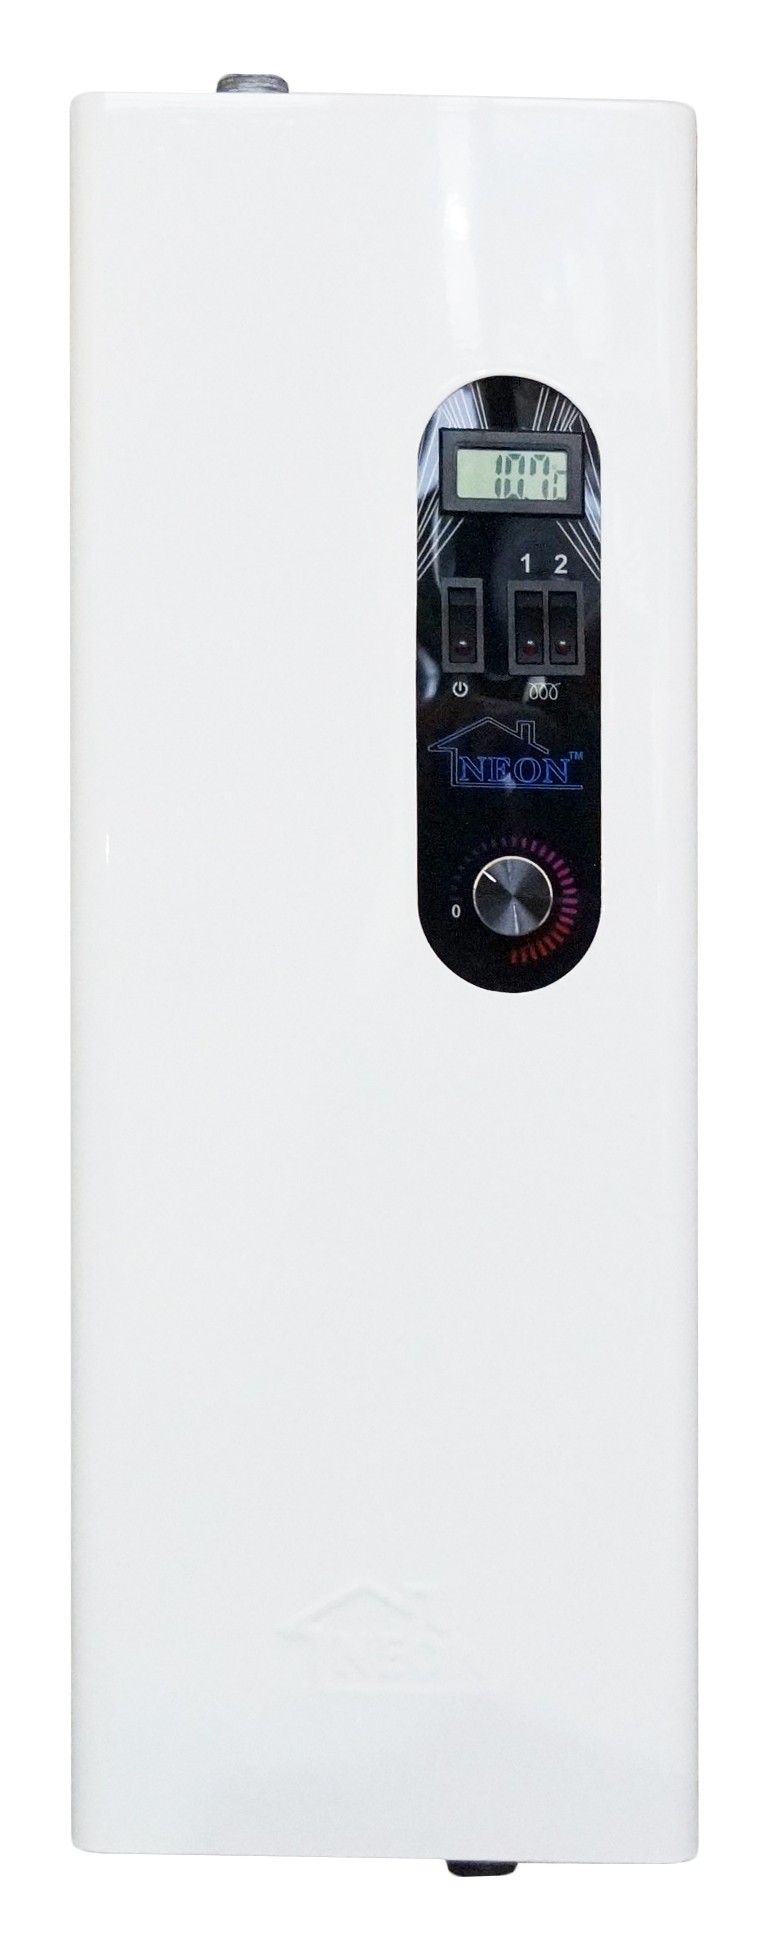 Электрический котел Neon Classik 9 кВТ 380V (WCS-9-380МП) в интернет-магазине, главное фото